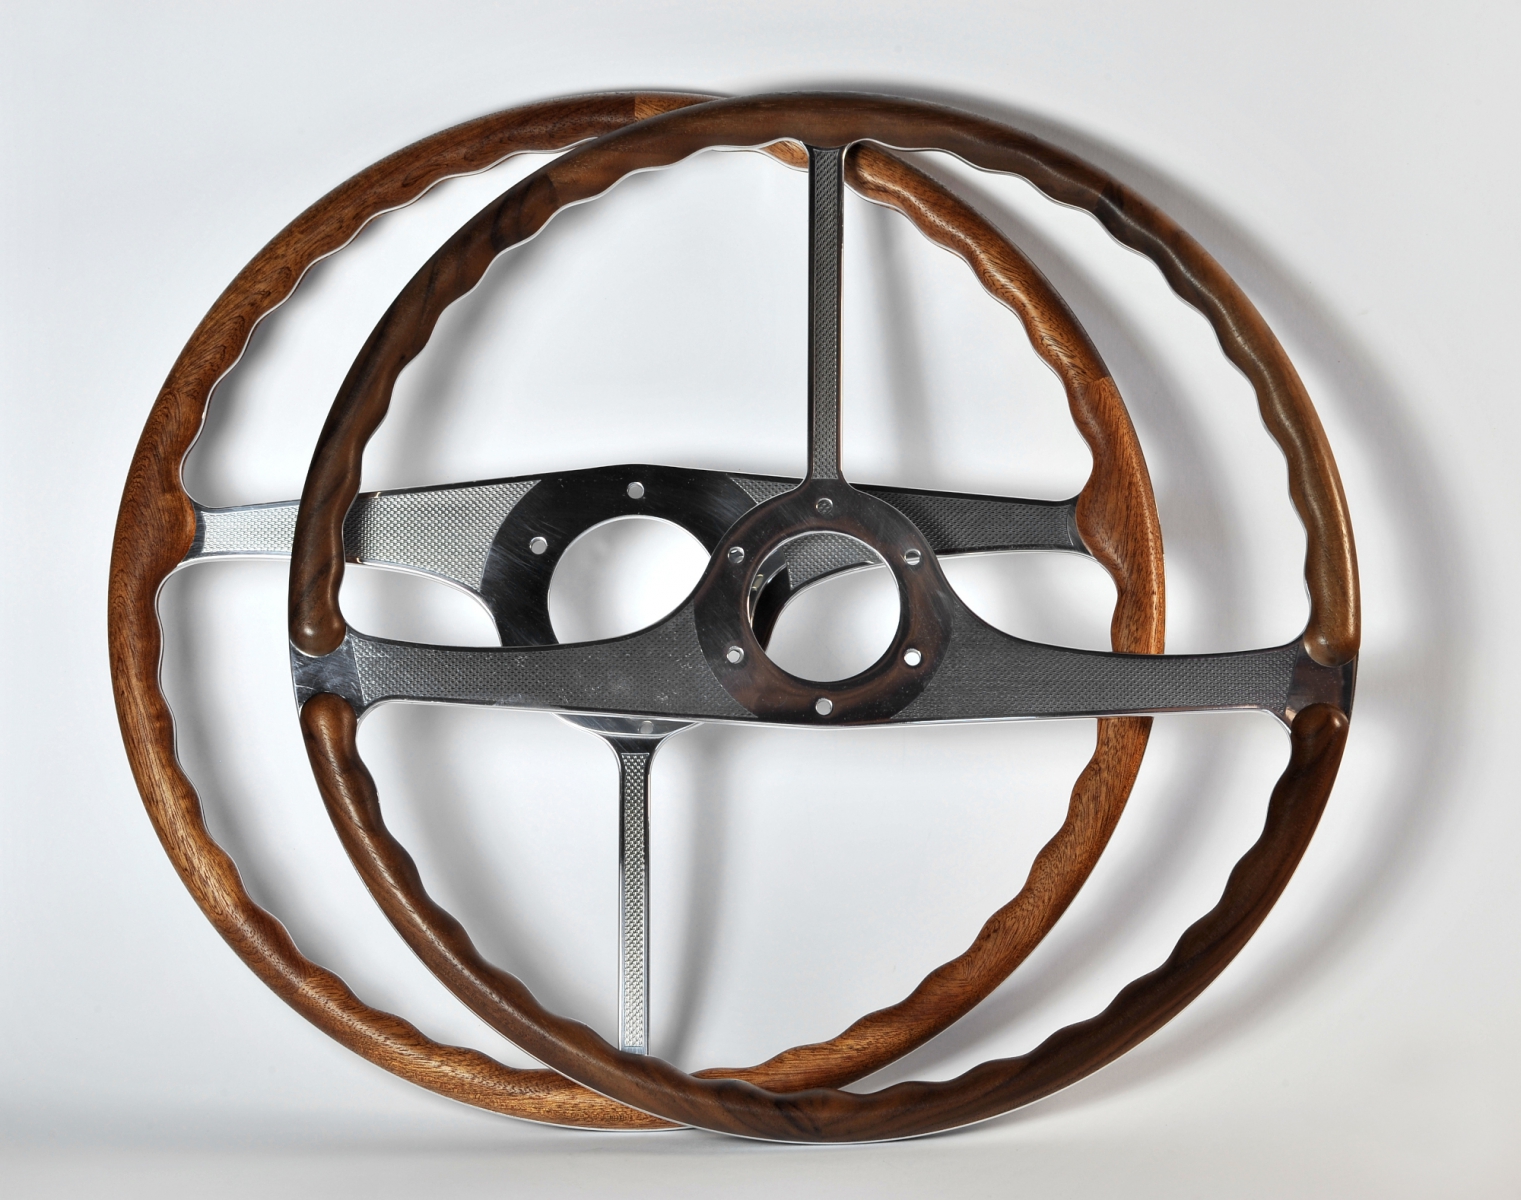 Marco Menini - 3D Wood three dimensional thinking